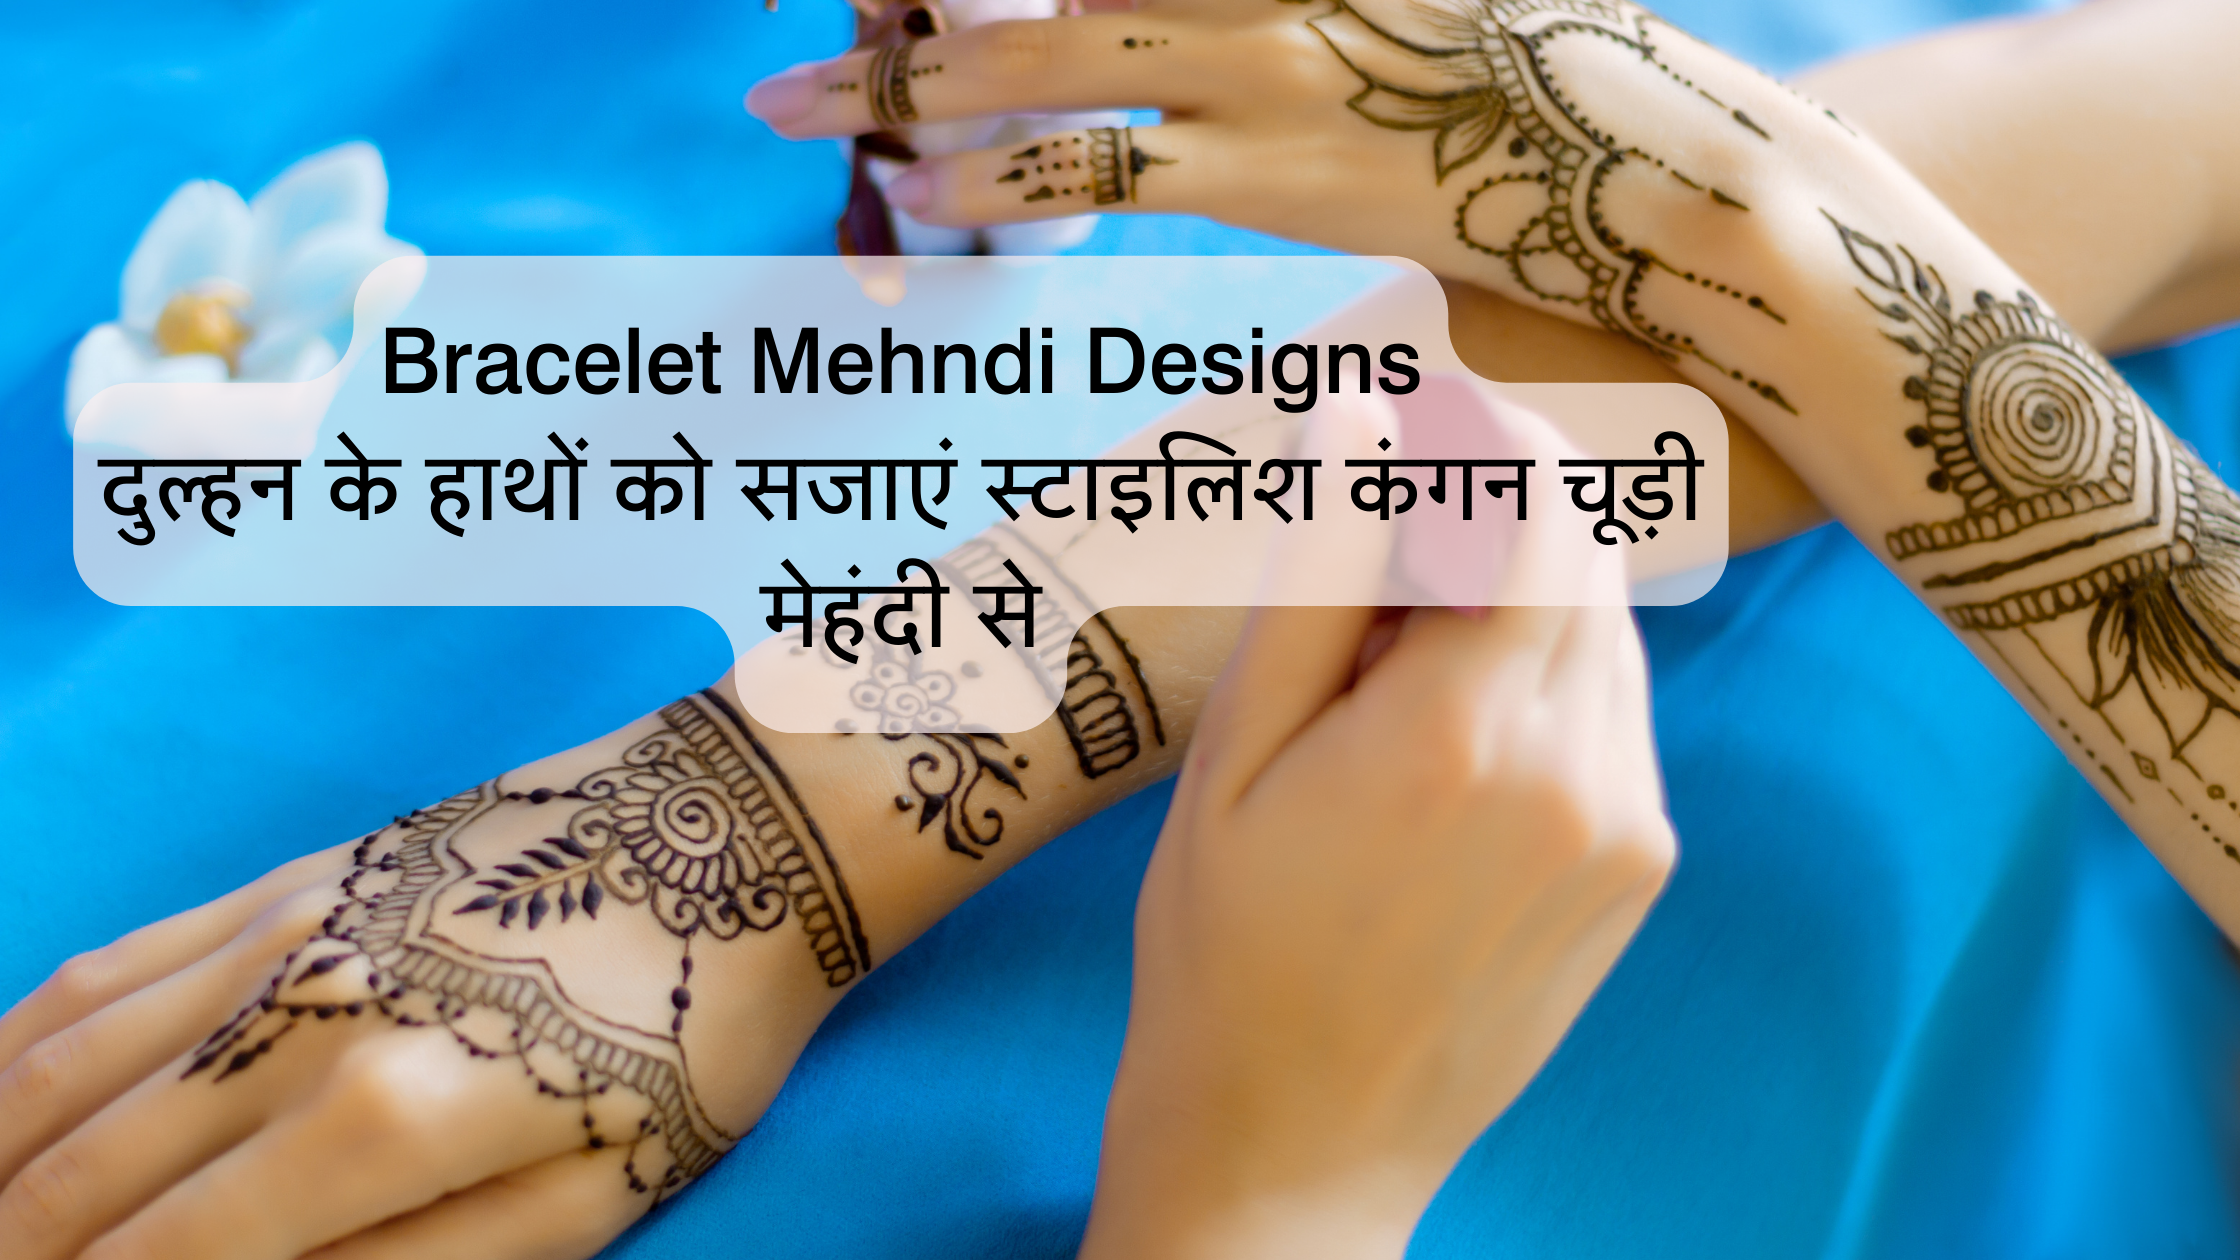 Bracelet-mehndi-Design-for-Gujarati-Bride | UR PHOTO | Flickr